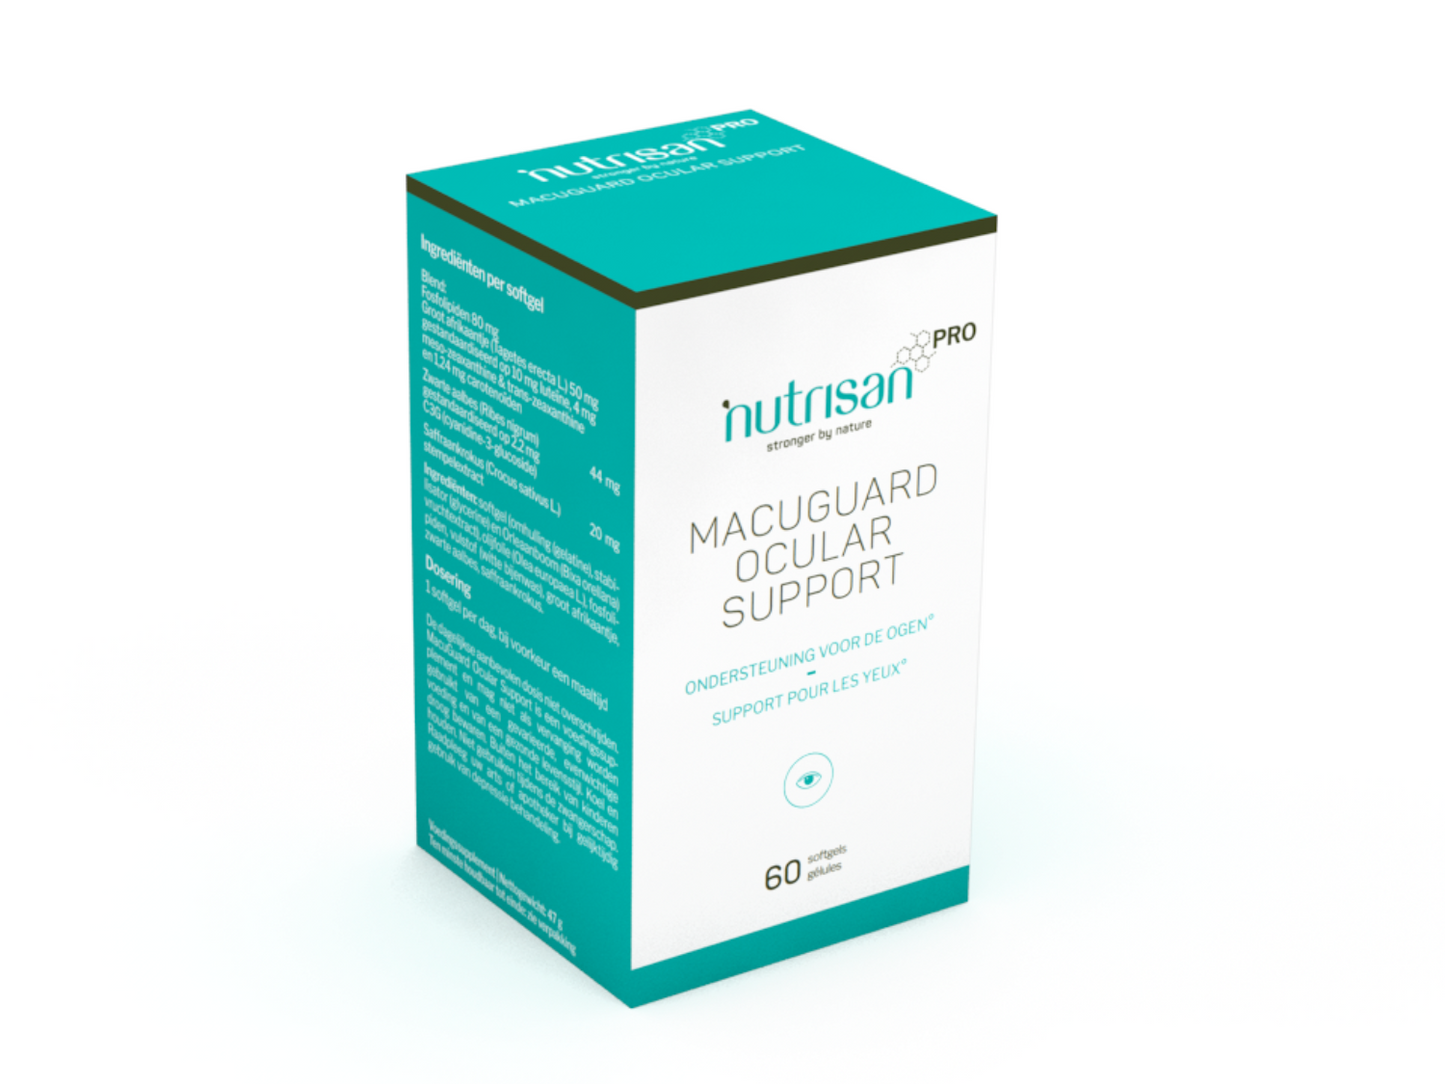 NutrisanPro MacuGuard Ocular Support - 60 softgels - Supplement voor ogen